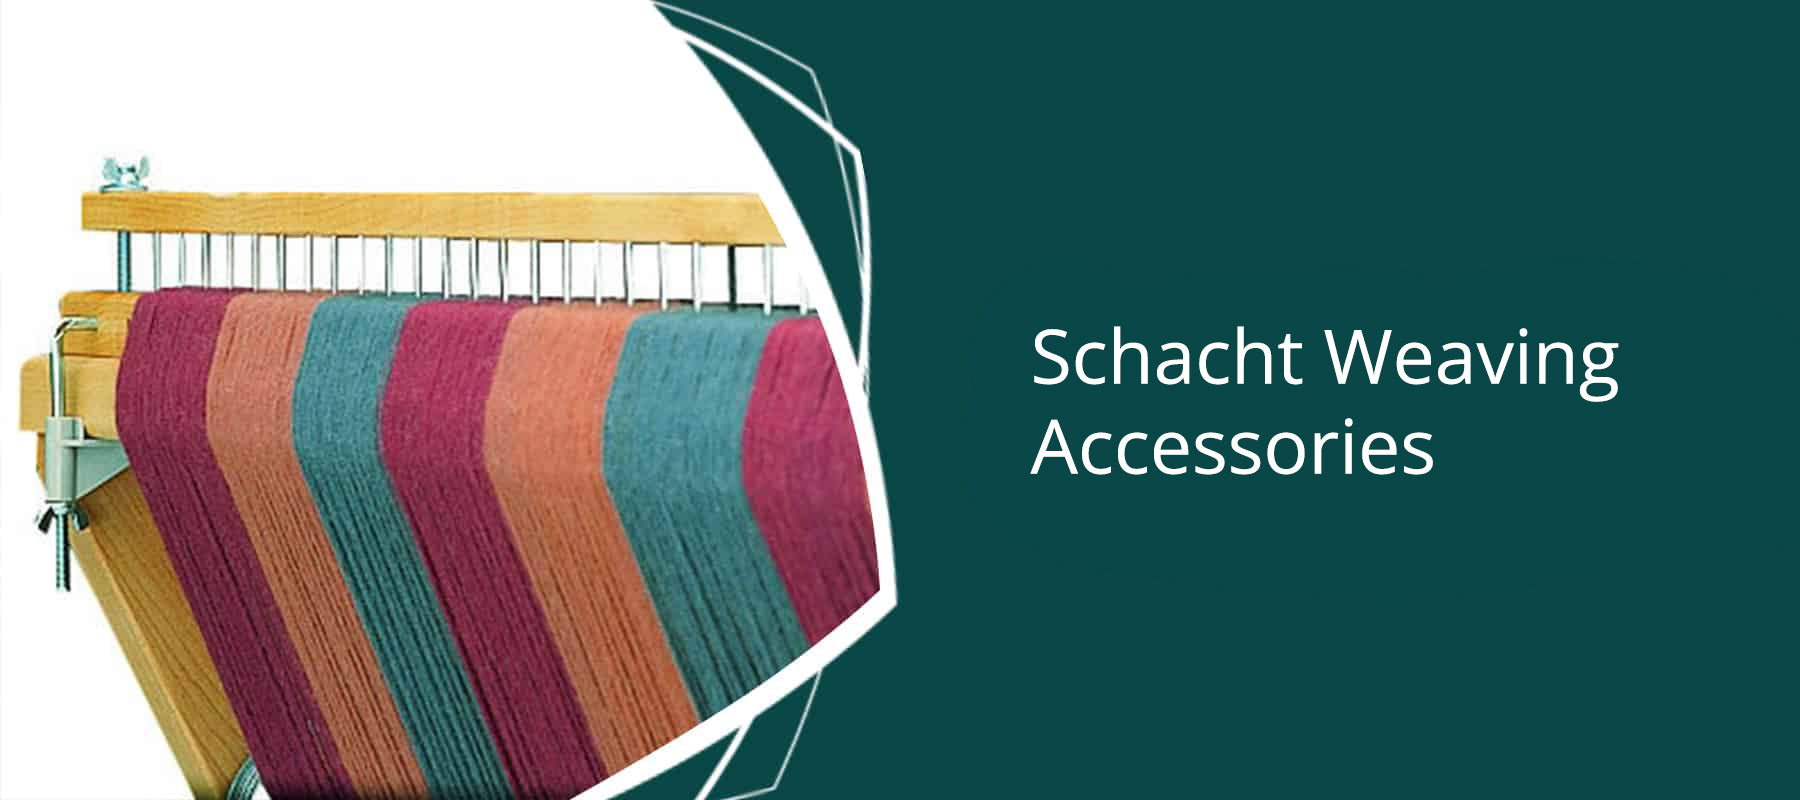 Schacht Weaving Accessories - Thread Collective Australia 